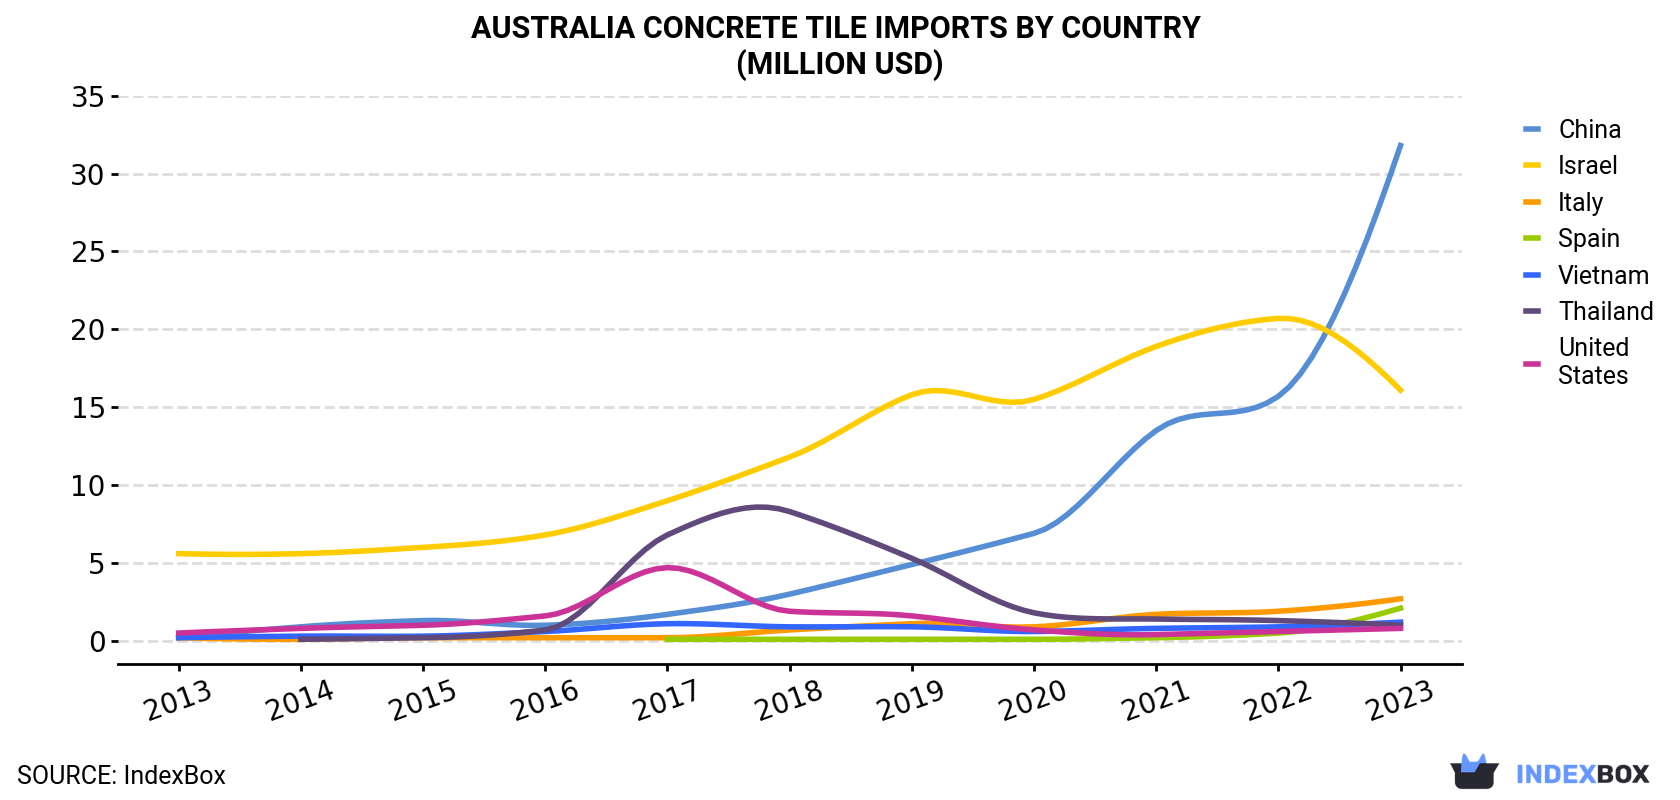 Australia Concrete Tile Imports By Country (Million USD)